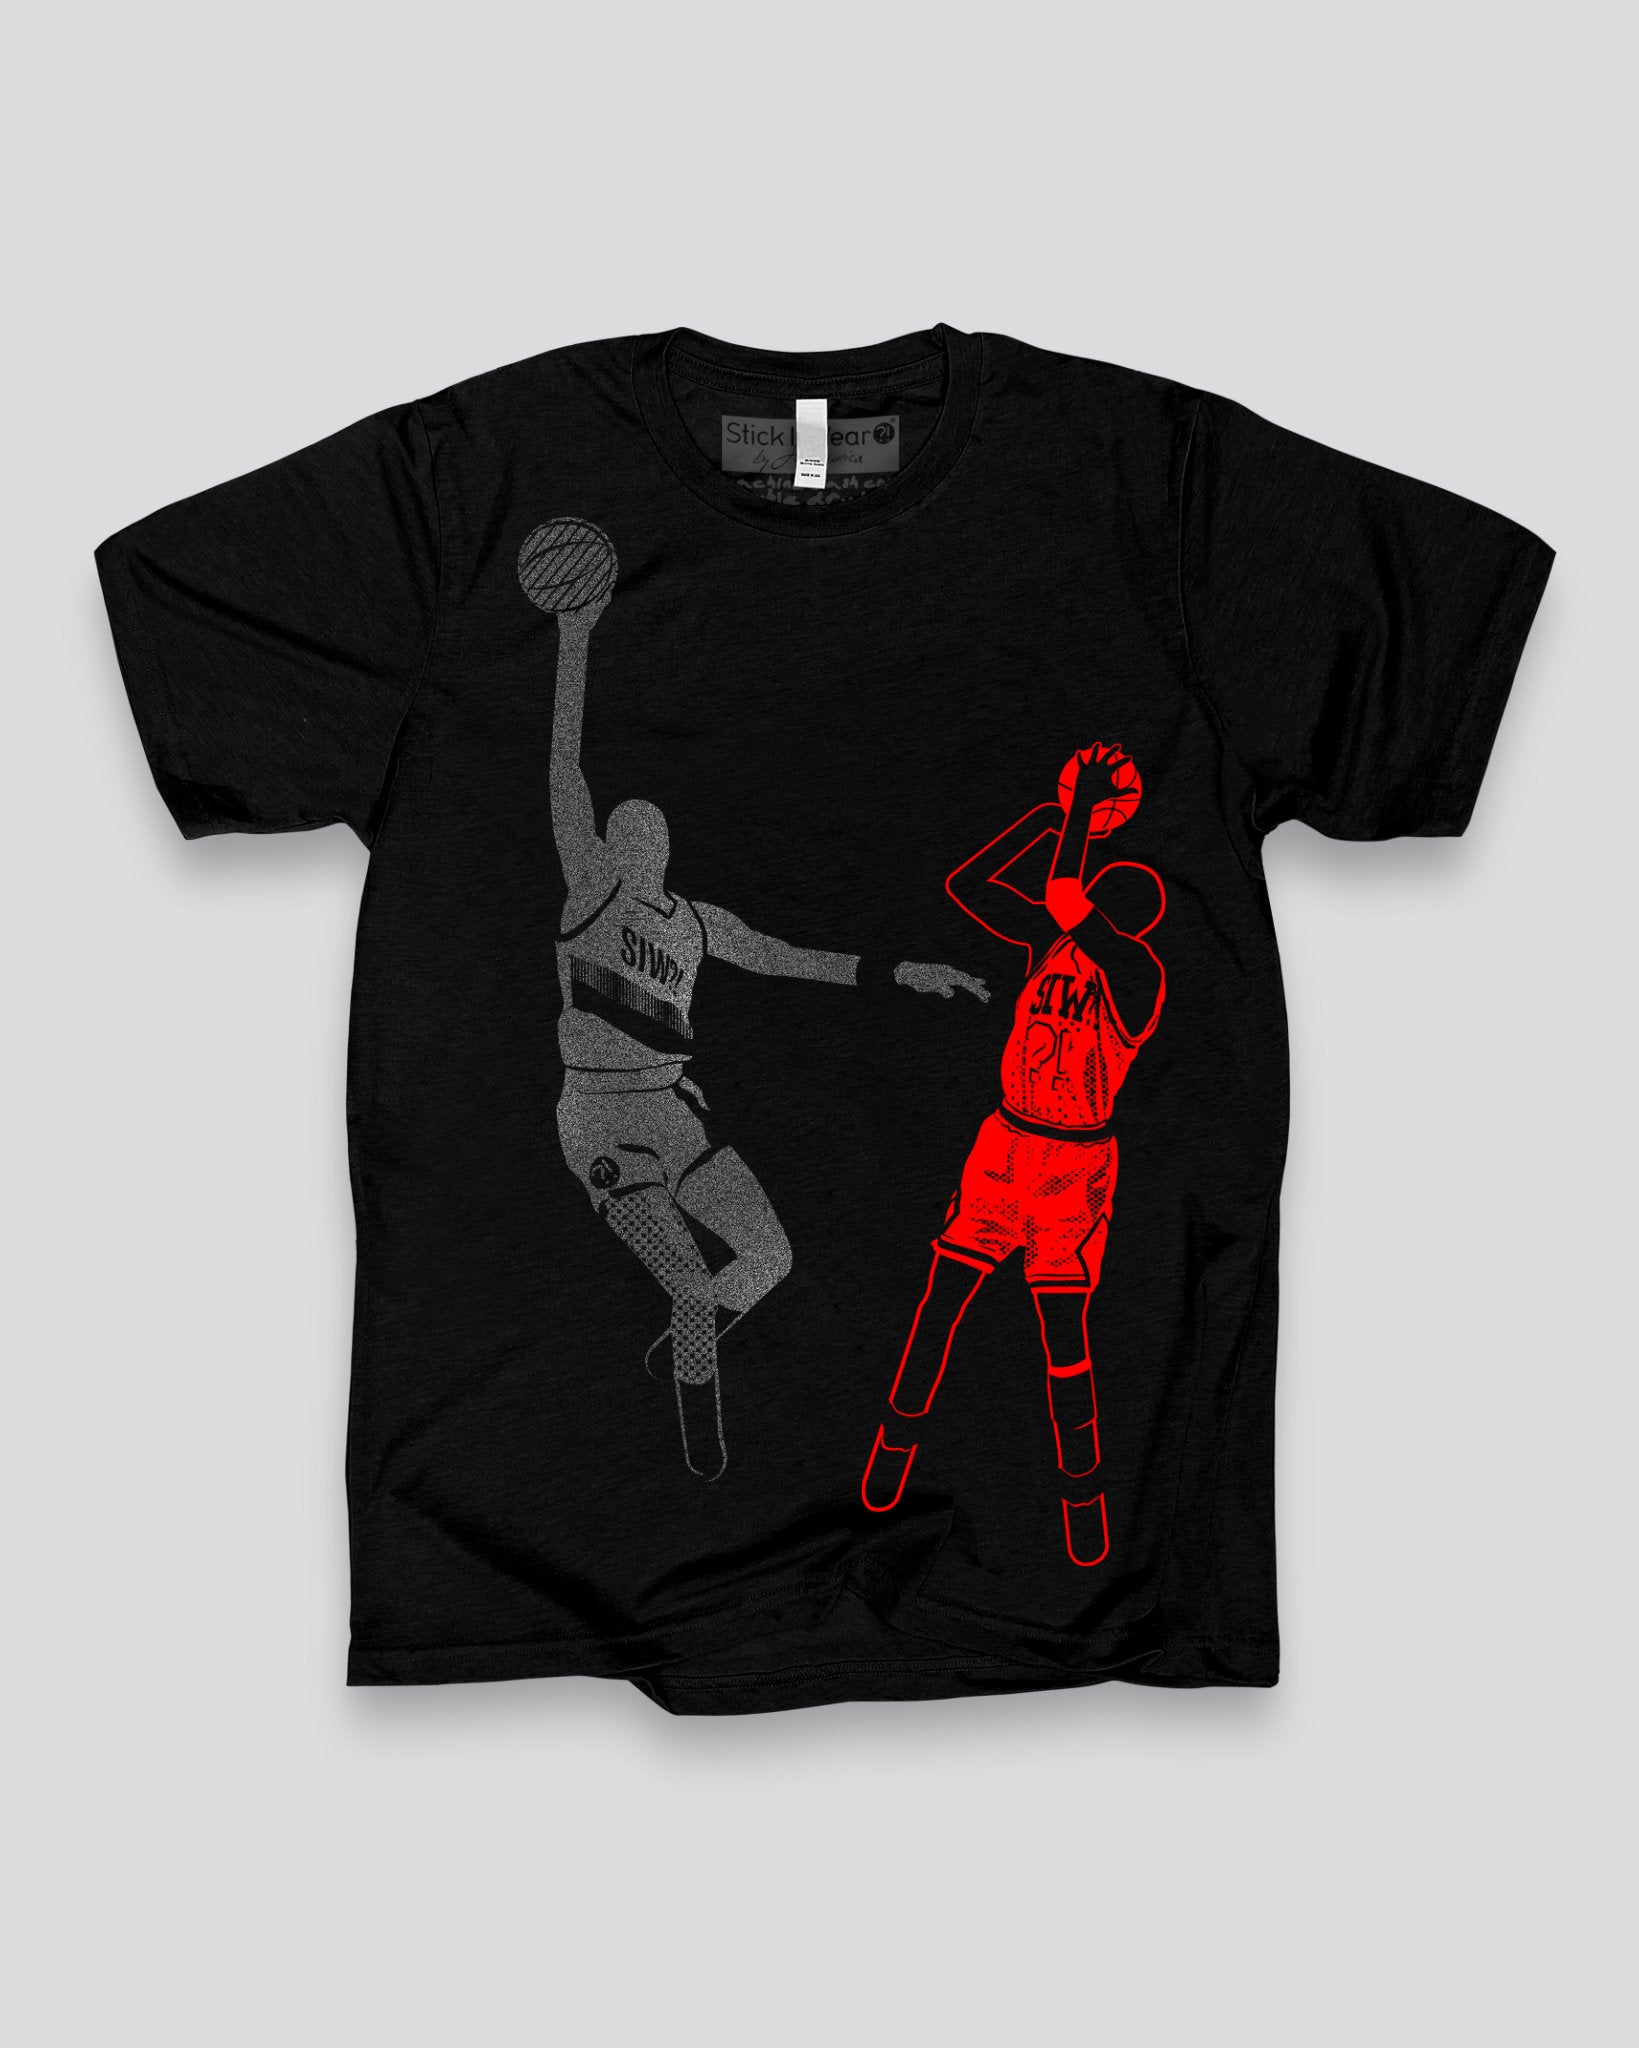 Basketball Sports Wear?! Apparel Fashion | Stick It